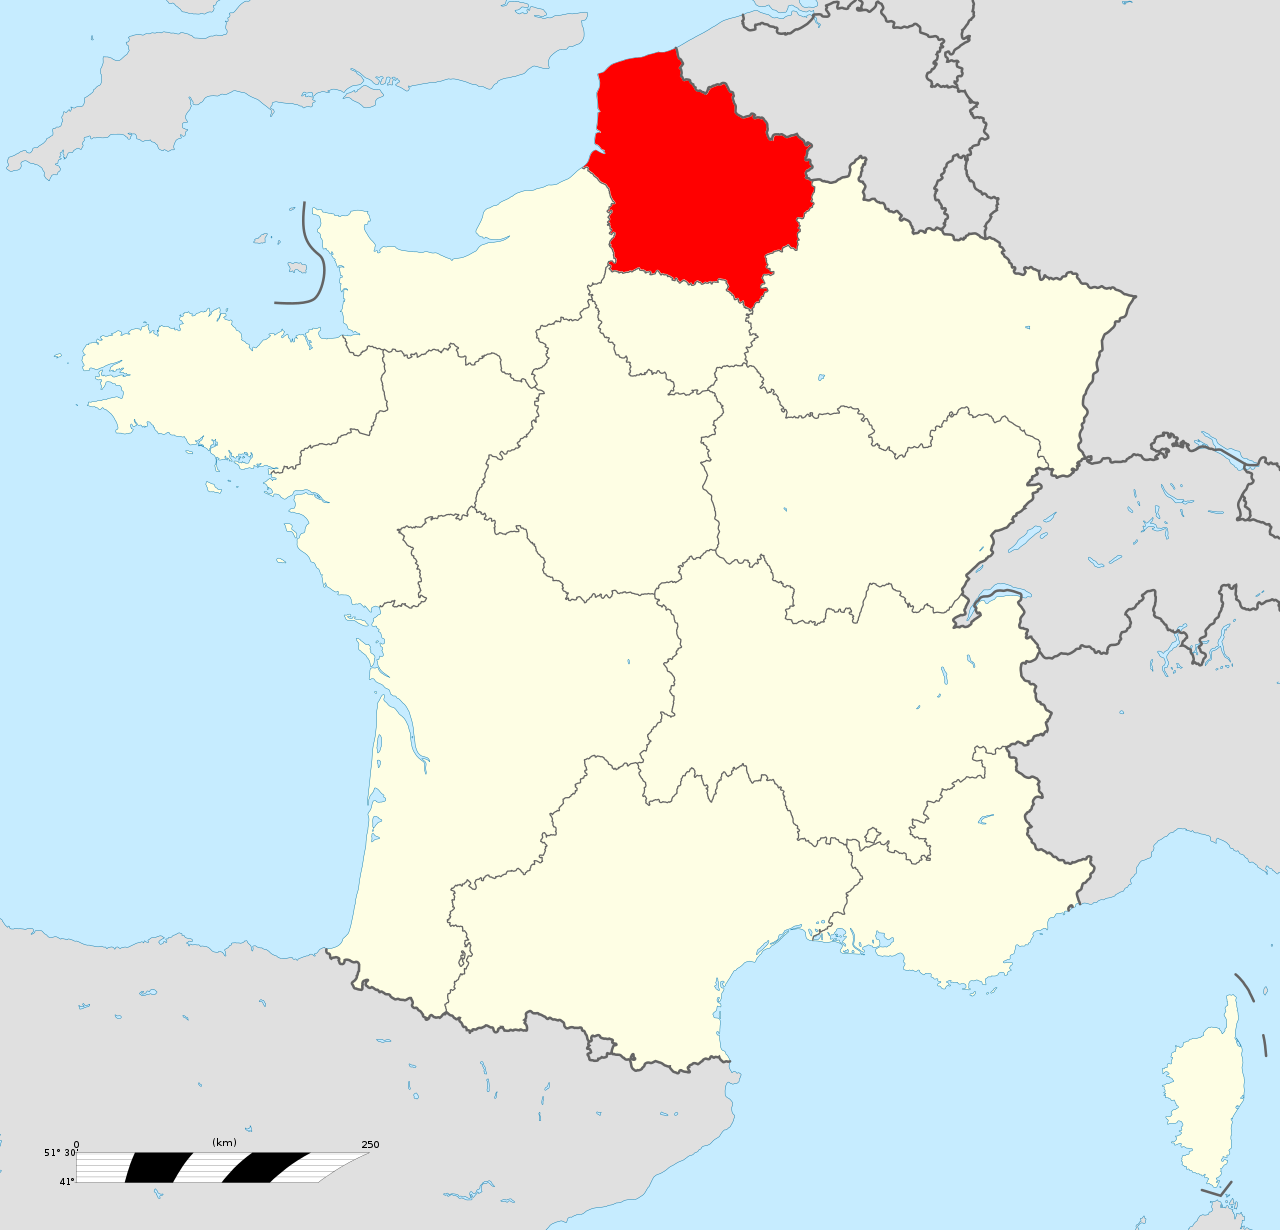 Gepetto House Urbex locatie in of rond de regio Hauts-de-France (Pas-de-Calais), France